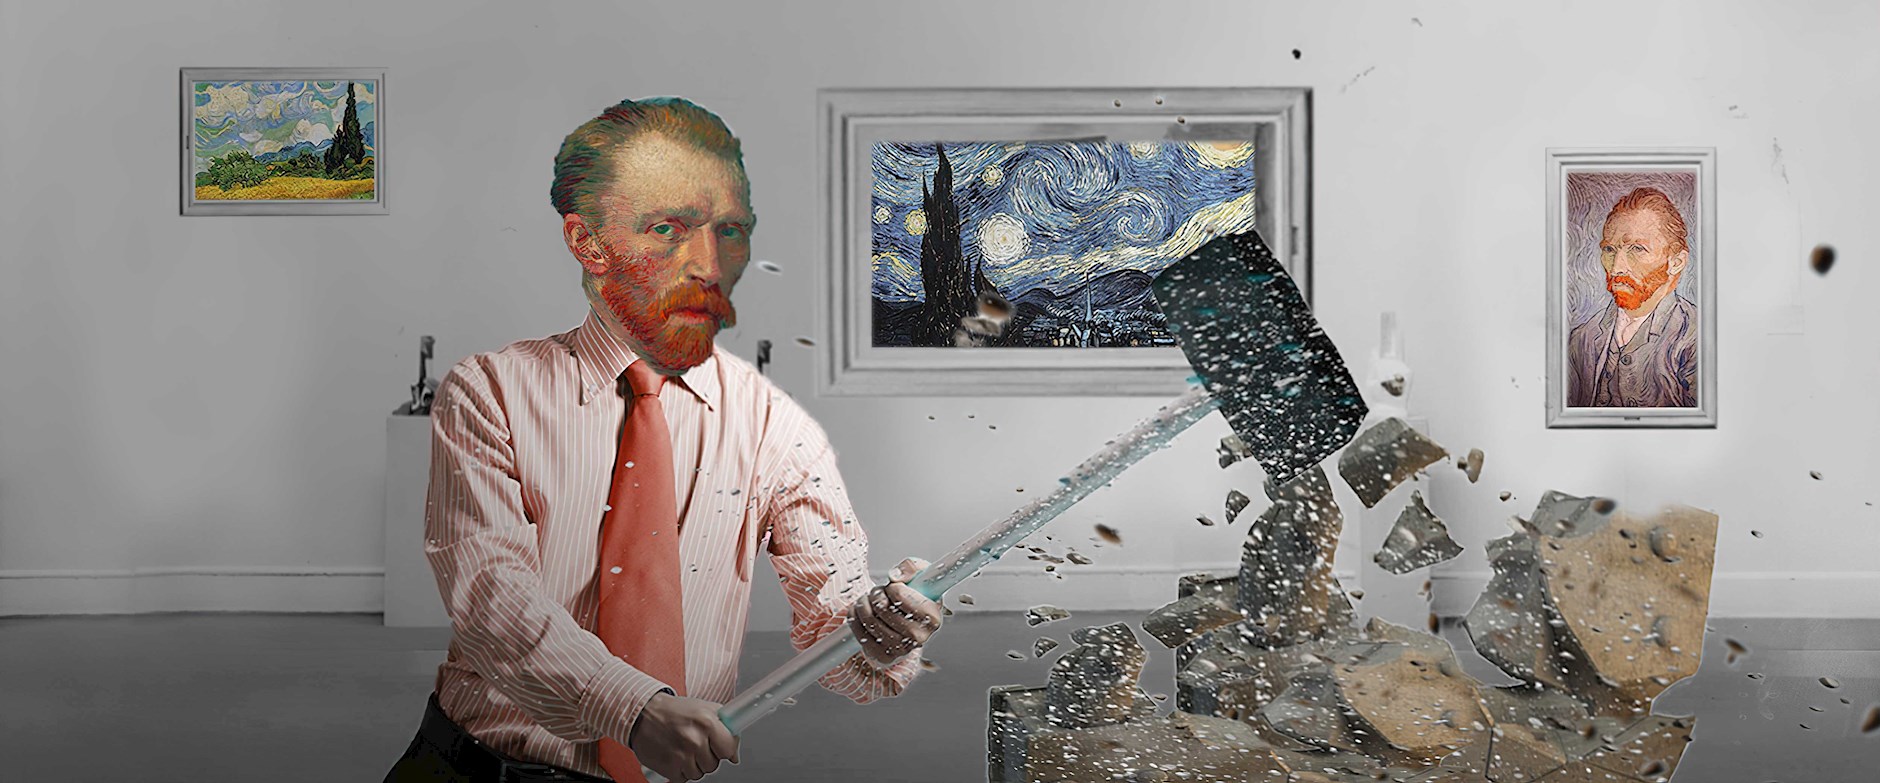 Van Gogh destroying a sculpture with a mallet